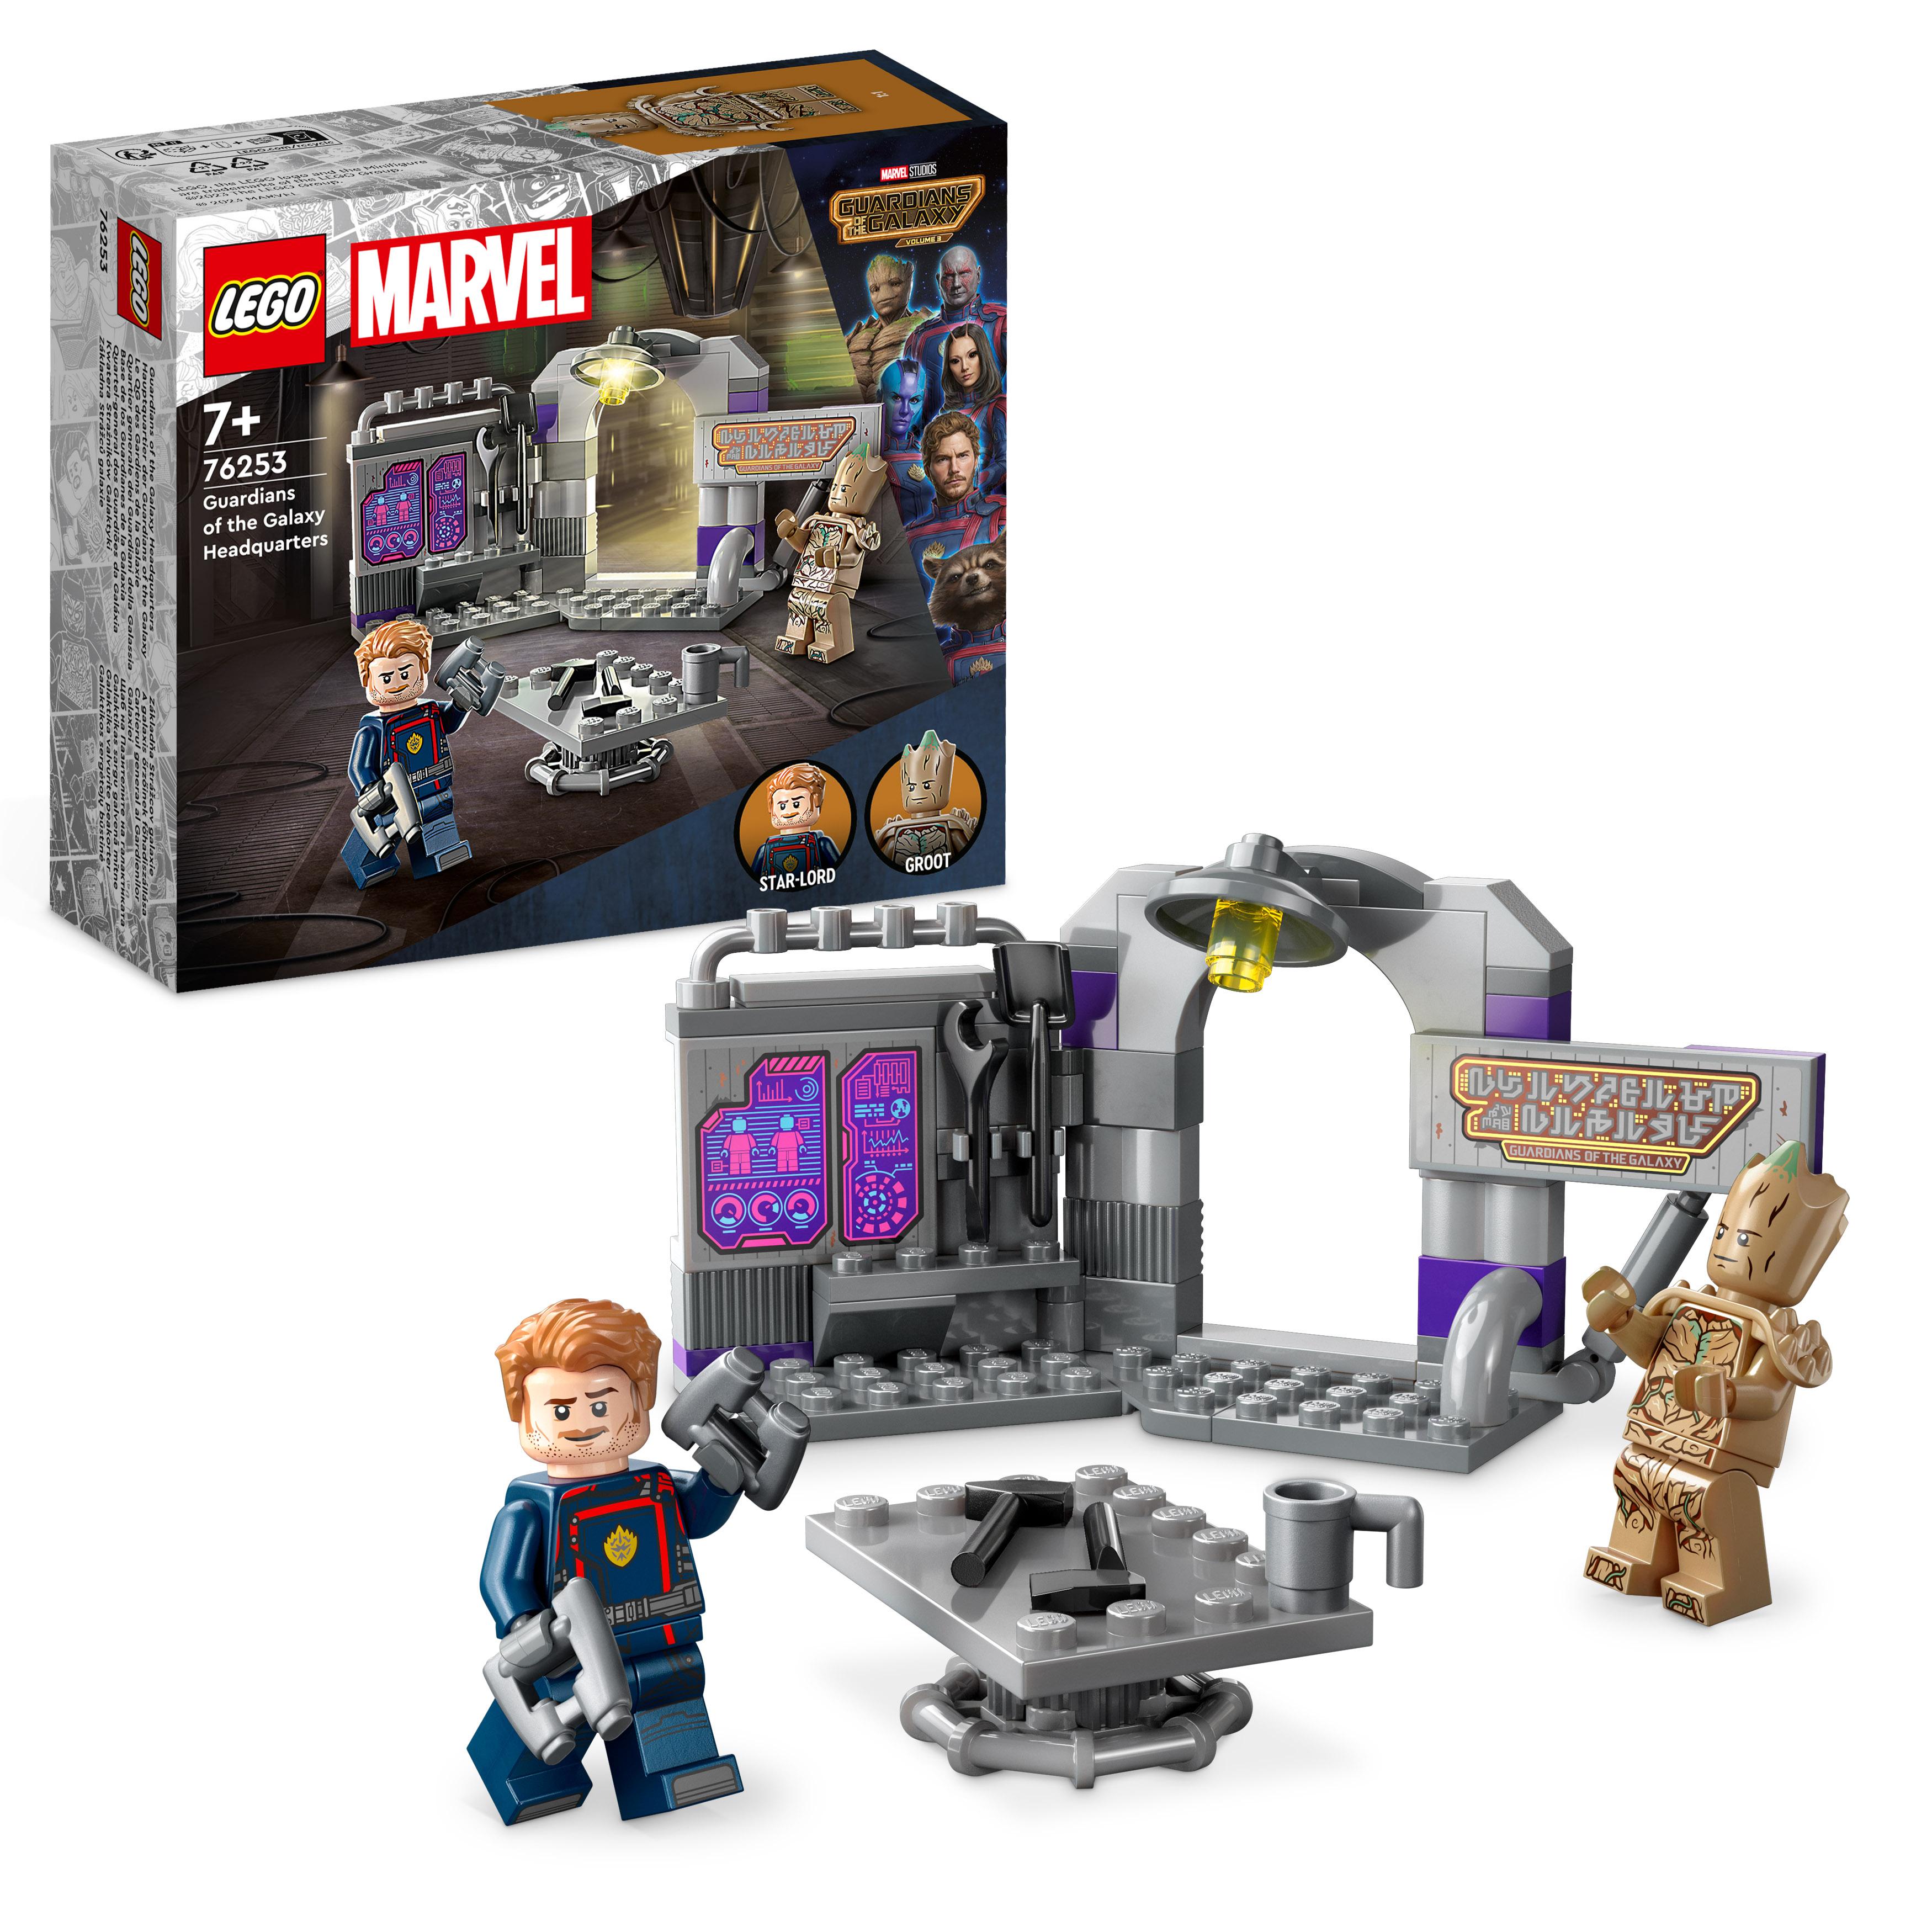 LEGO 76253 Marvel Guardians Hauptquartier der